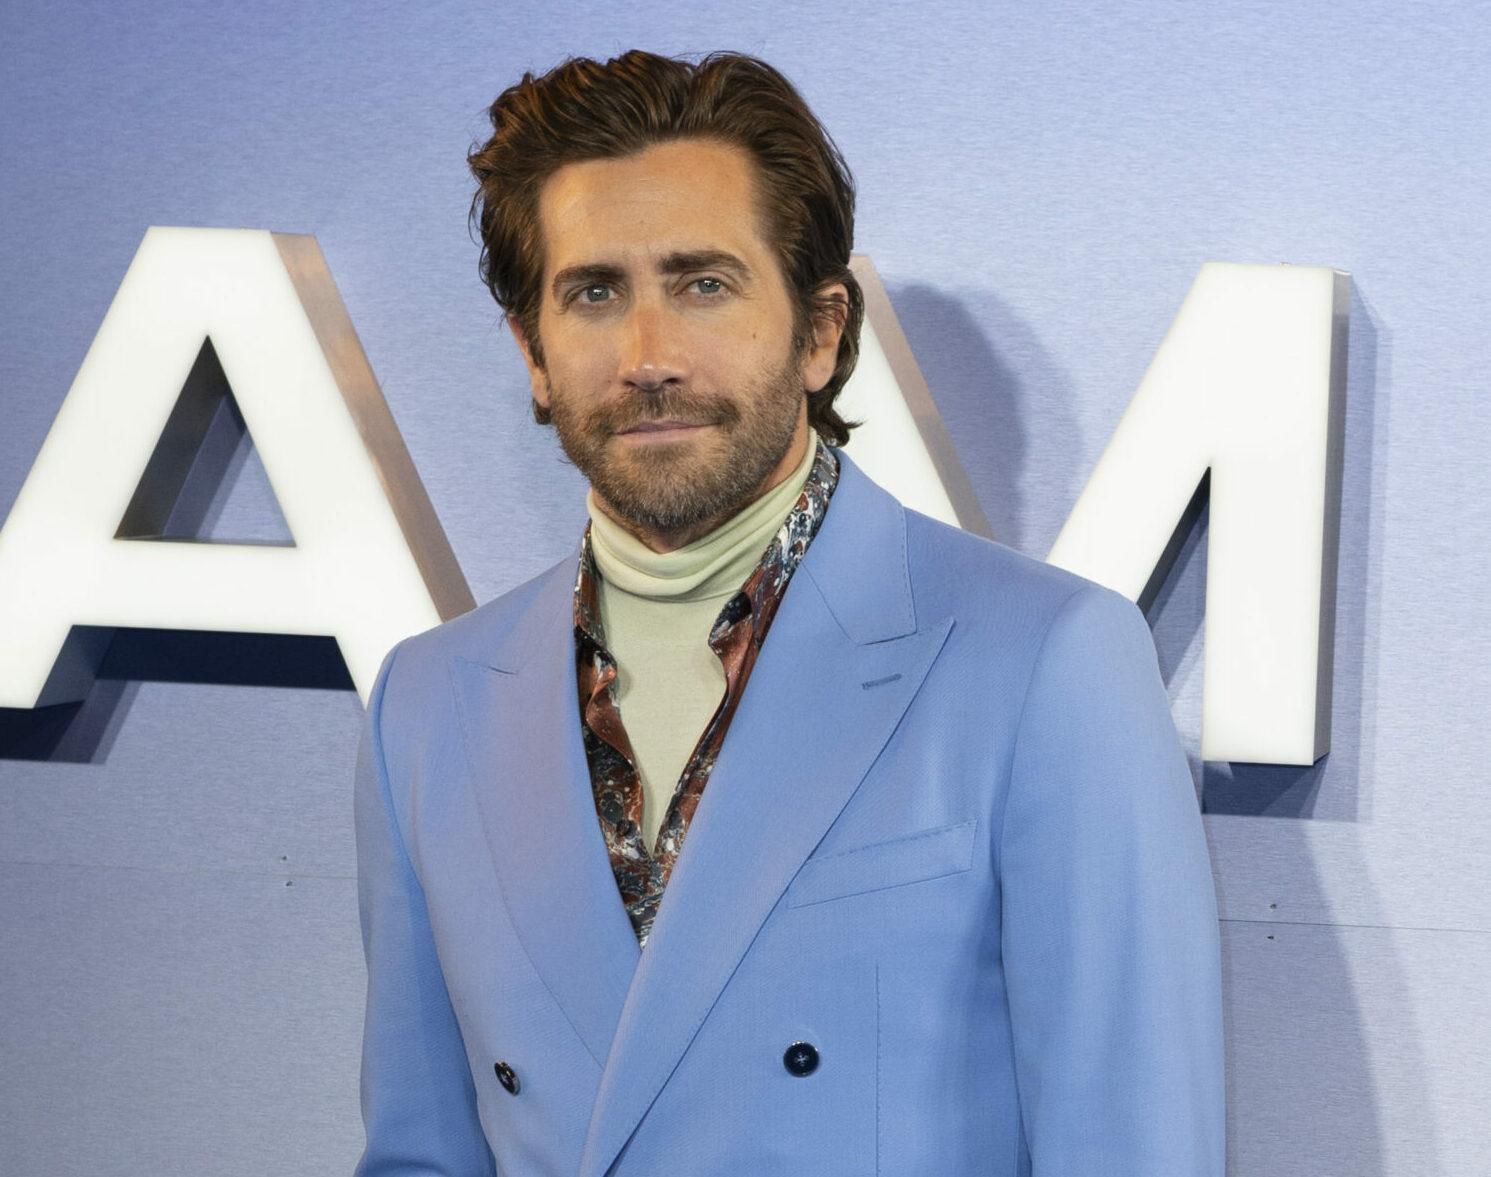 Jake Gyllenhaal at "Ambulance" Film Premiere